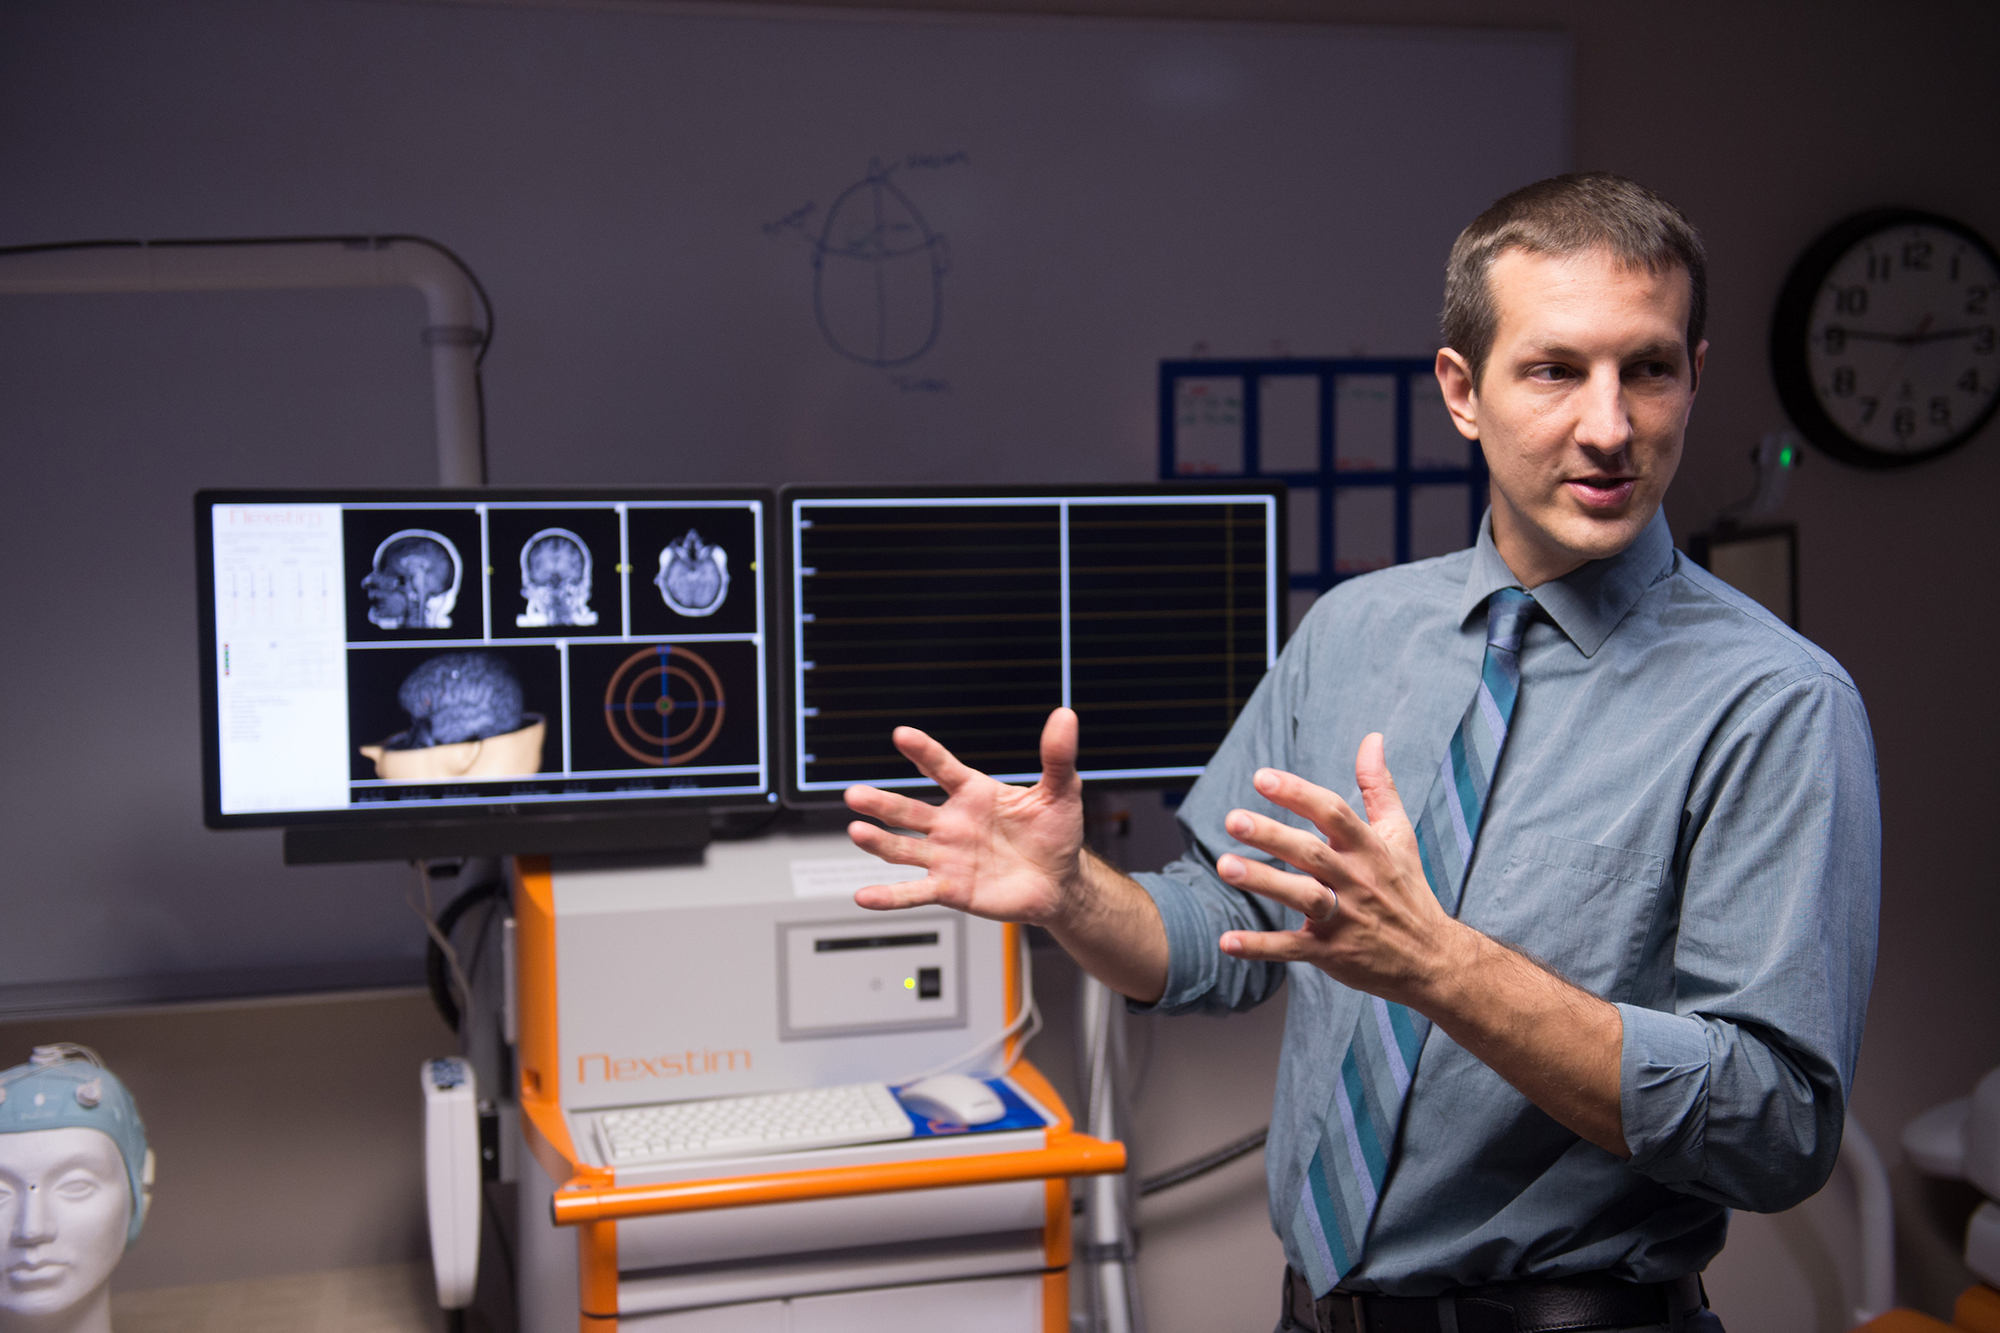 Aaron Boes neurologist at the University of Iowa